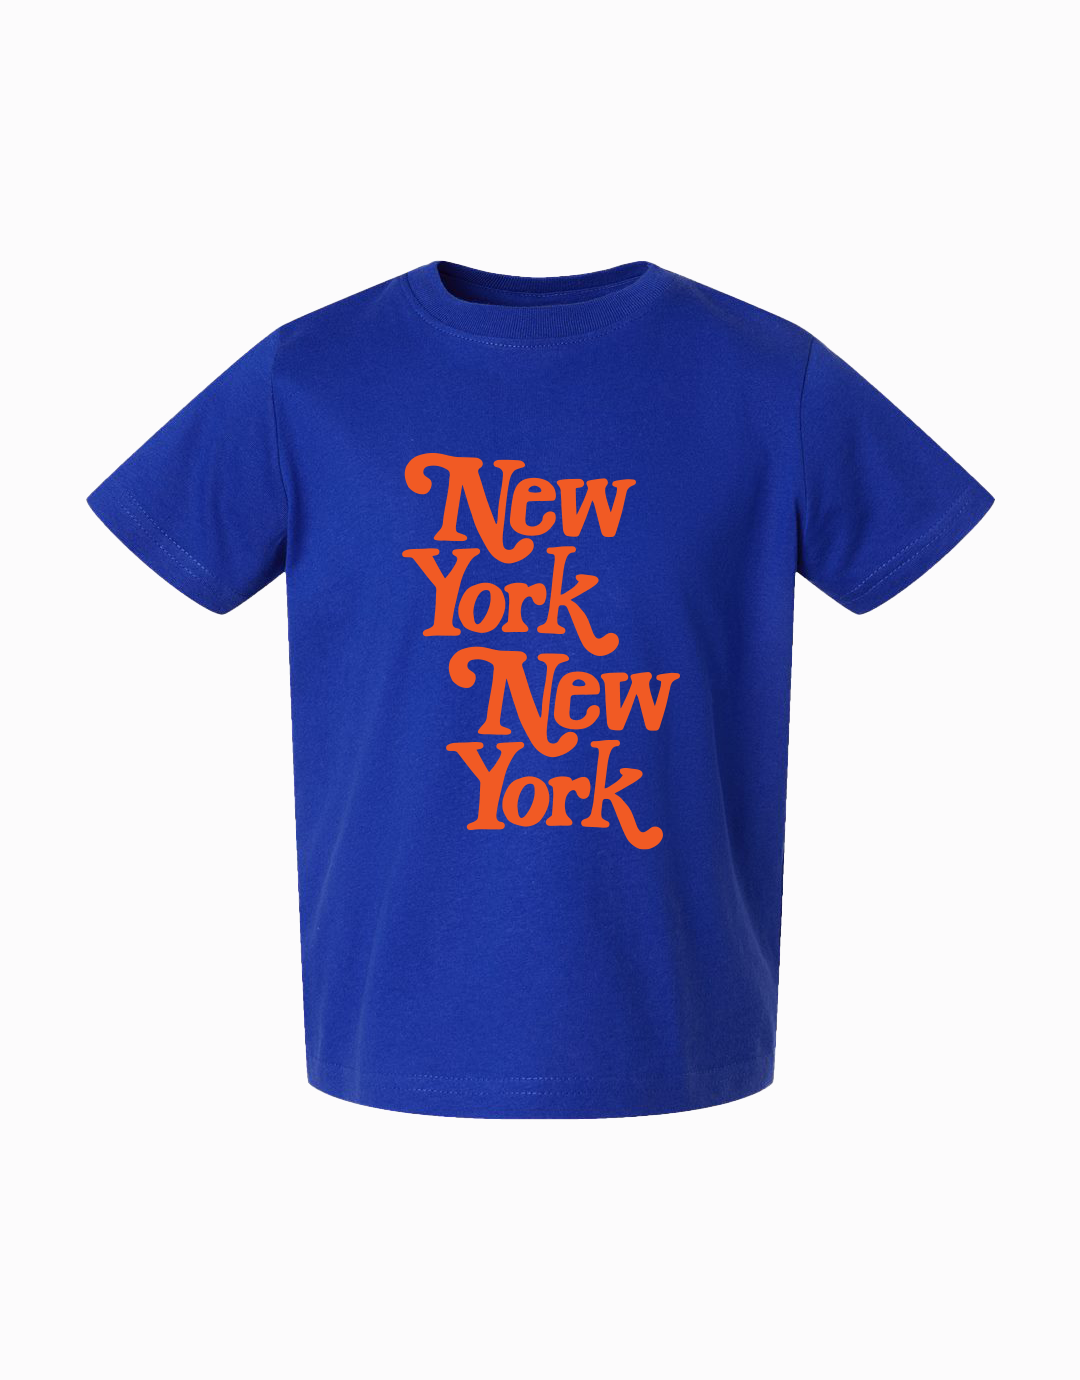 New York, New York Toddler & Youth Tee - Blue/Orange